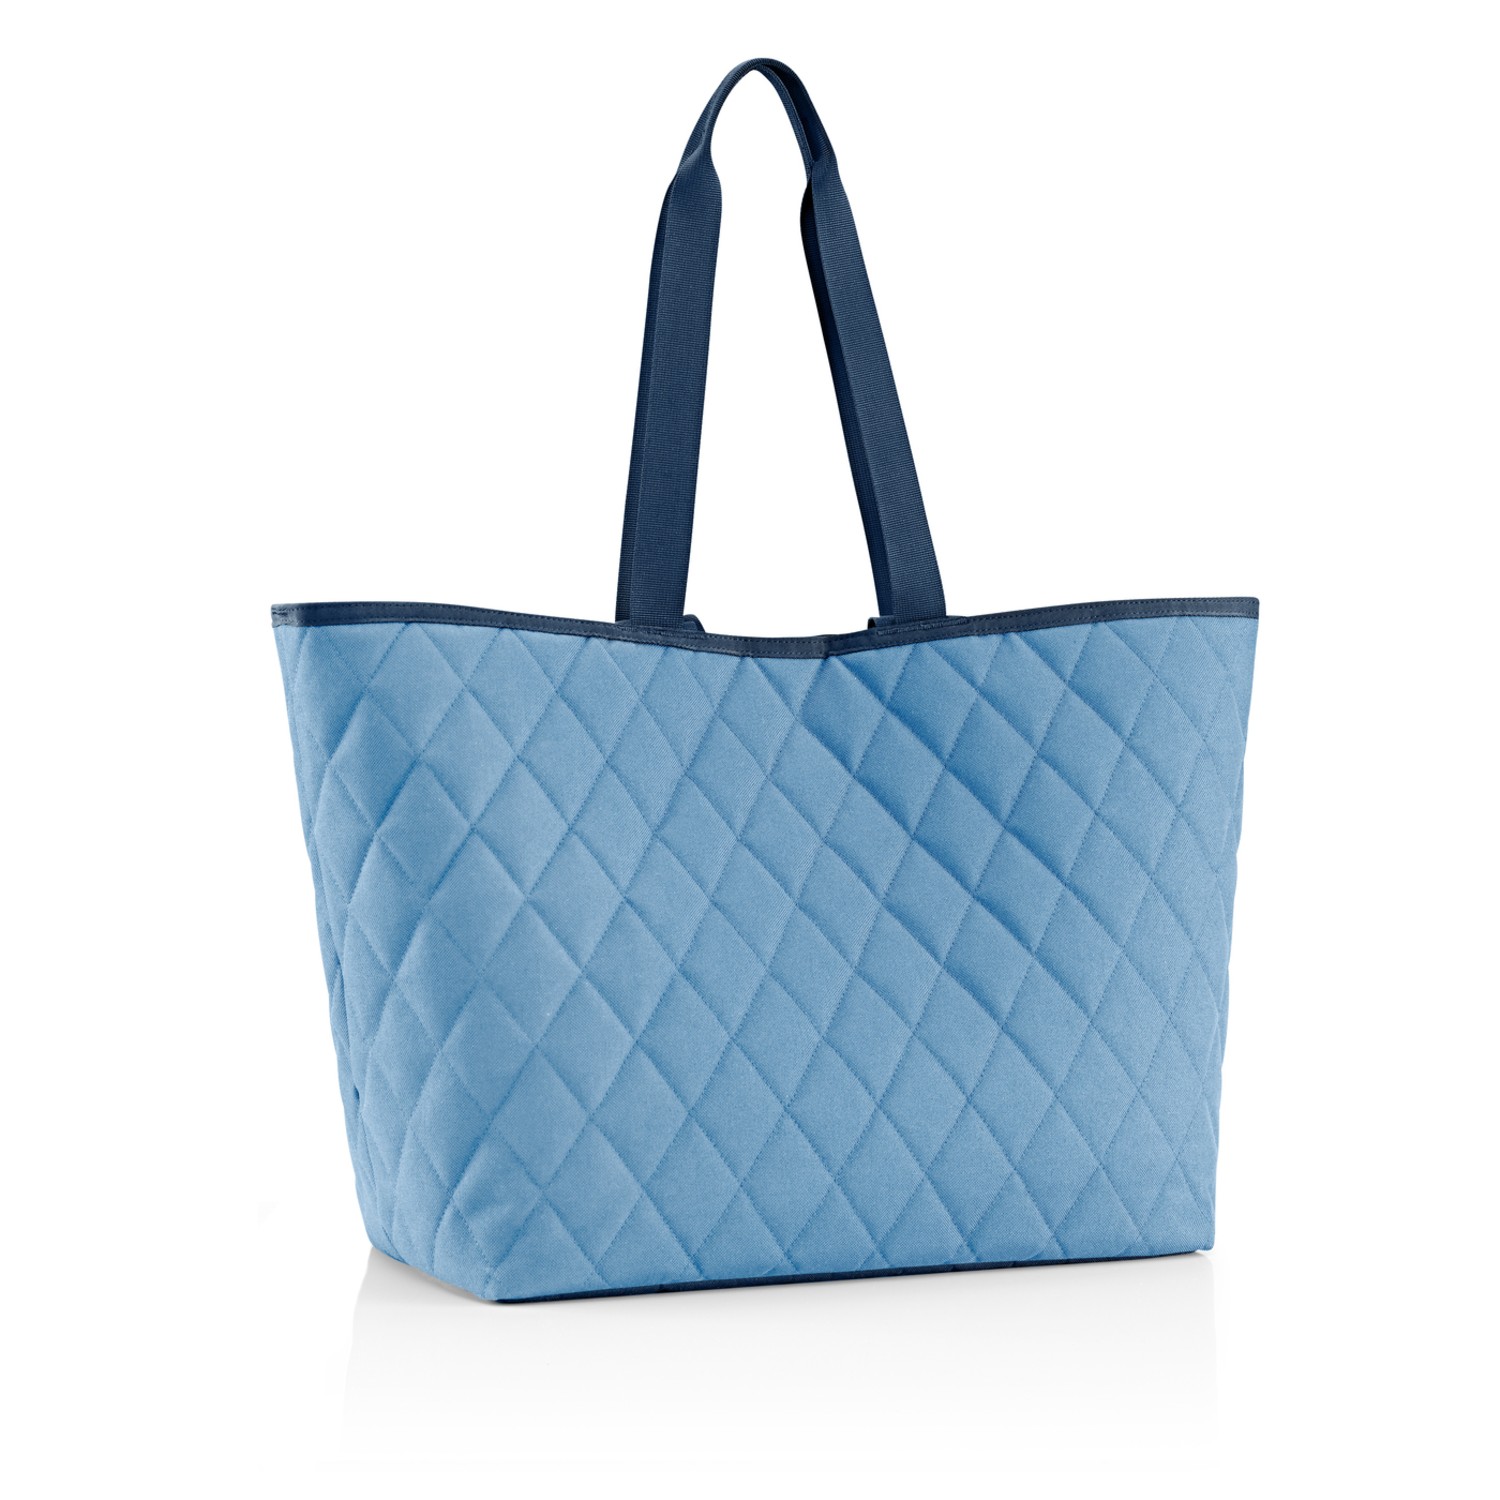 rhombus kaufen online | DL4101 blue aoshop.de reisenthel® Classic im XL Shopper